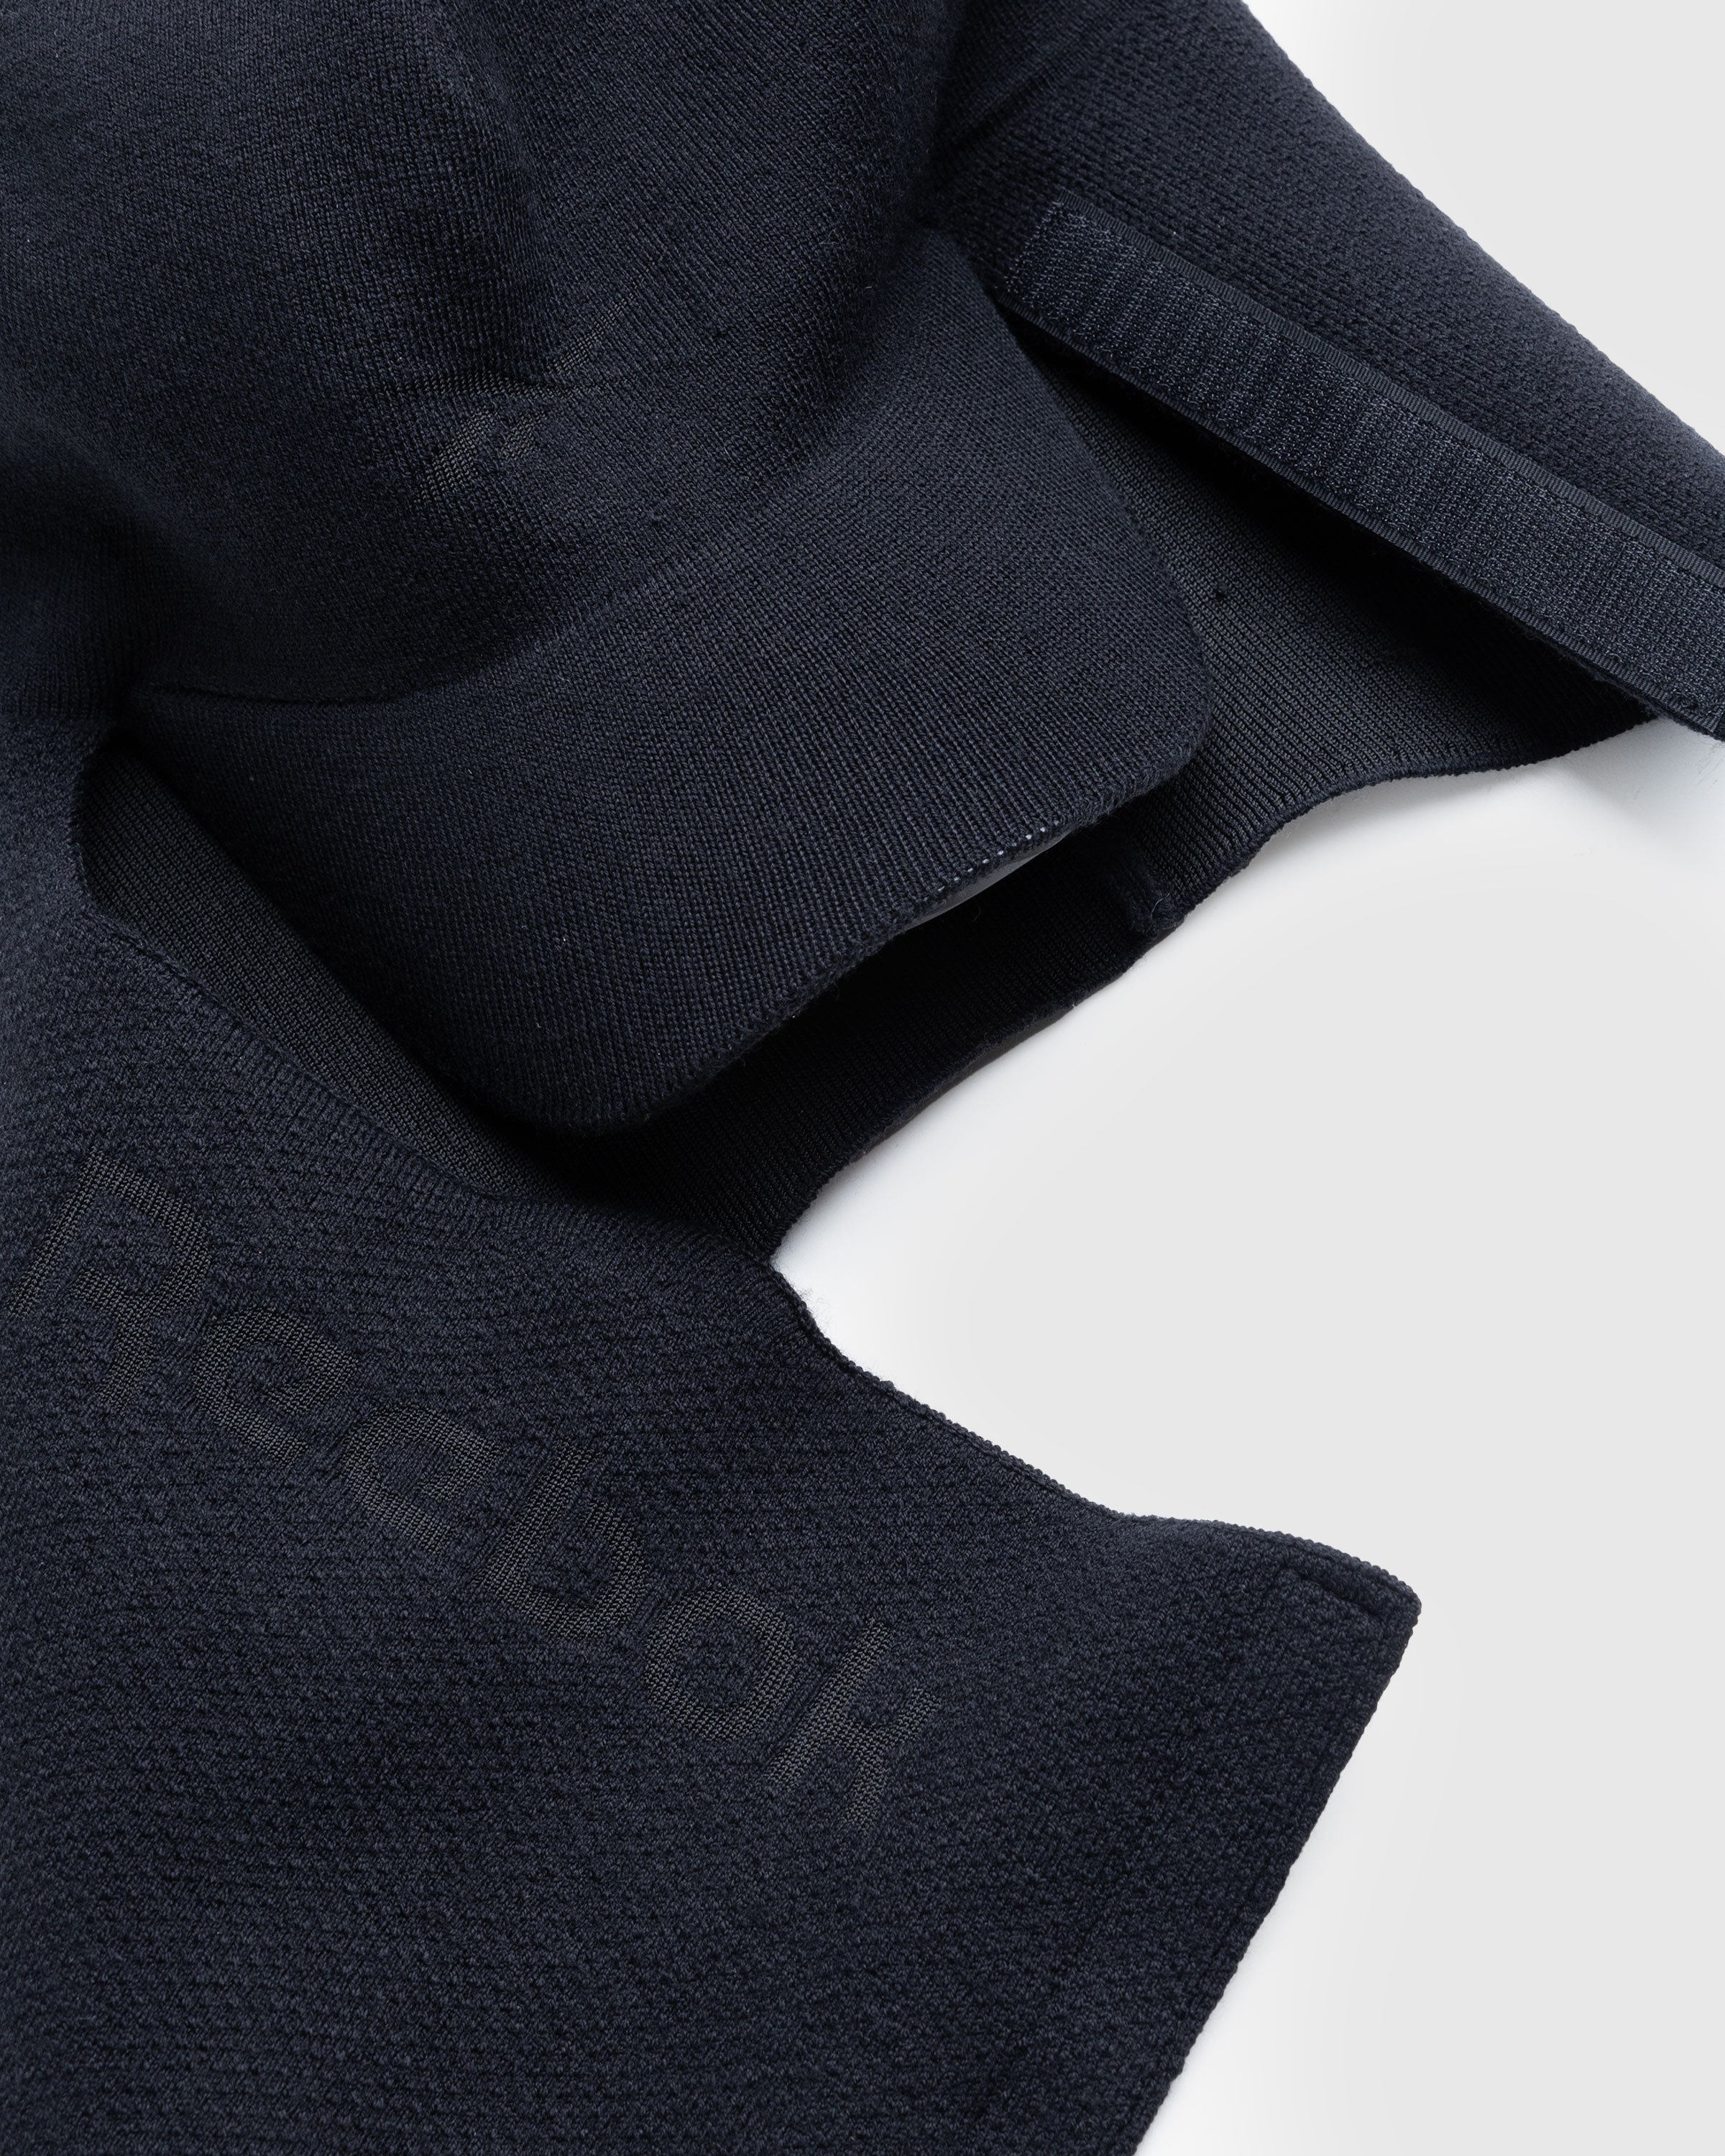 Reebok - Knit Mask Hat Black - Accessories - Black - Image 6